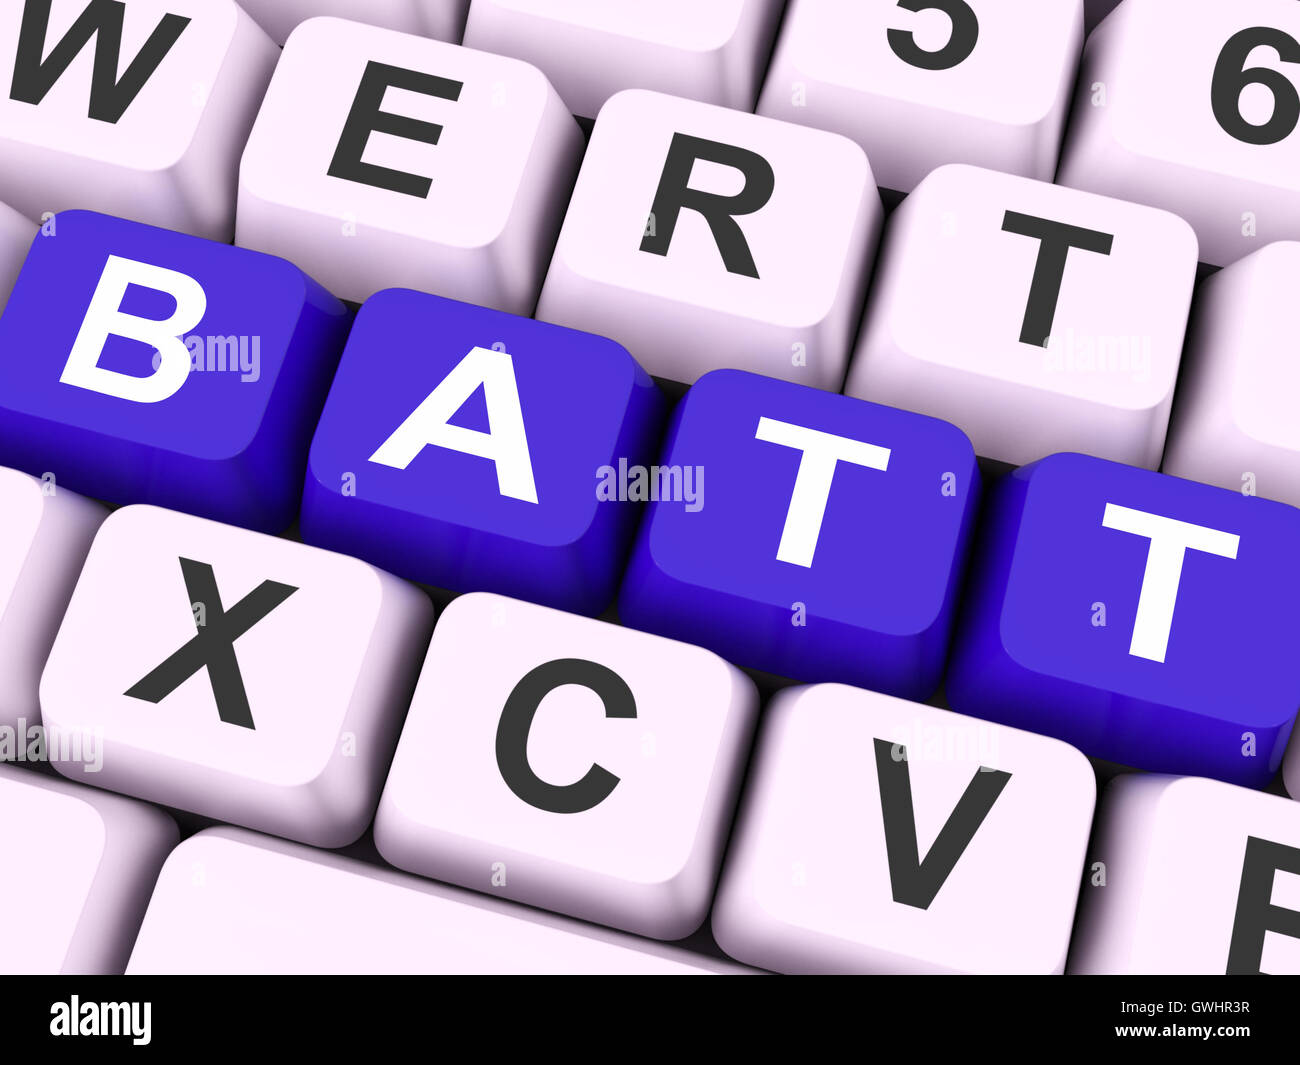 Batt Keys Shows Battery Or Batteries Charge Stock Photo